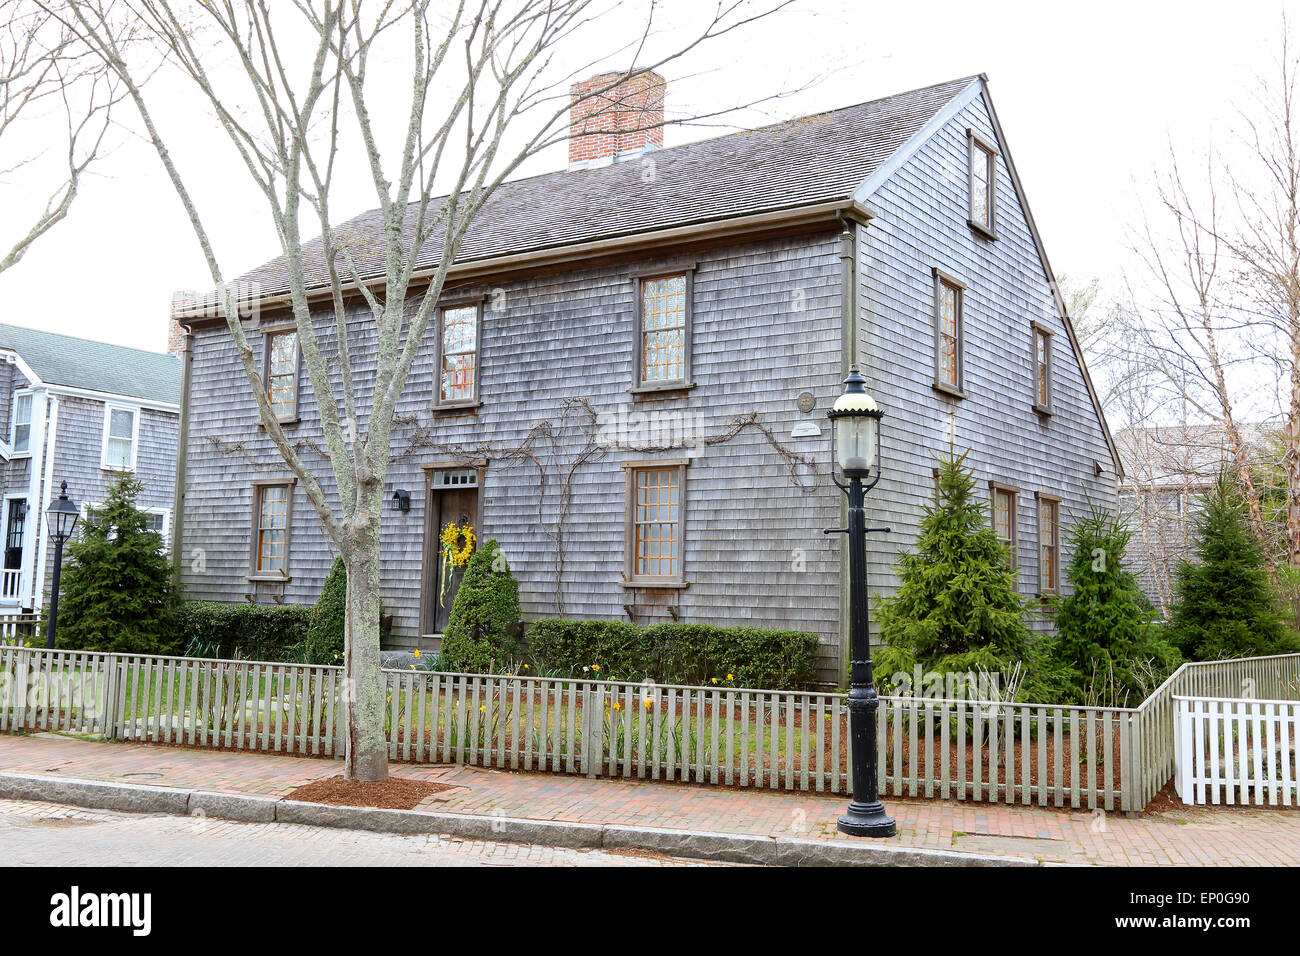 Nantucket Massachusetts on Nantucket Island. Old wooden house with flower wreath on Christopher Starbuck house, circa 1690. Stock Photo